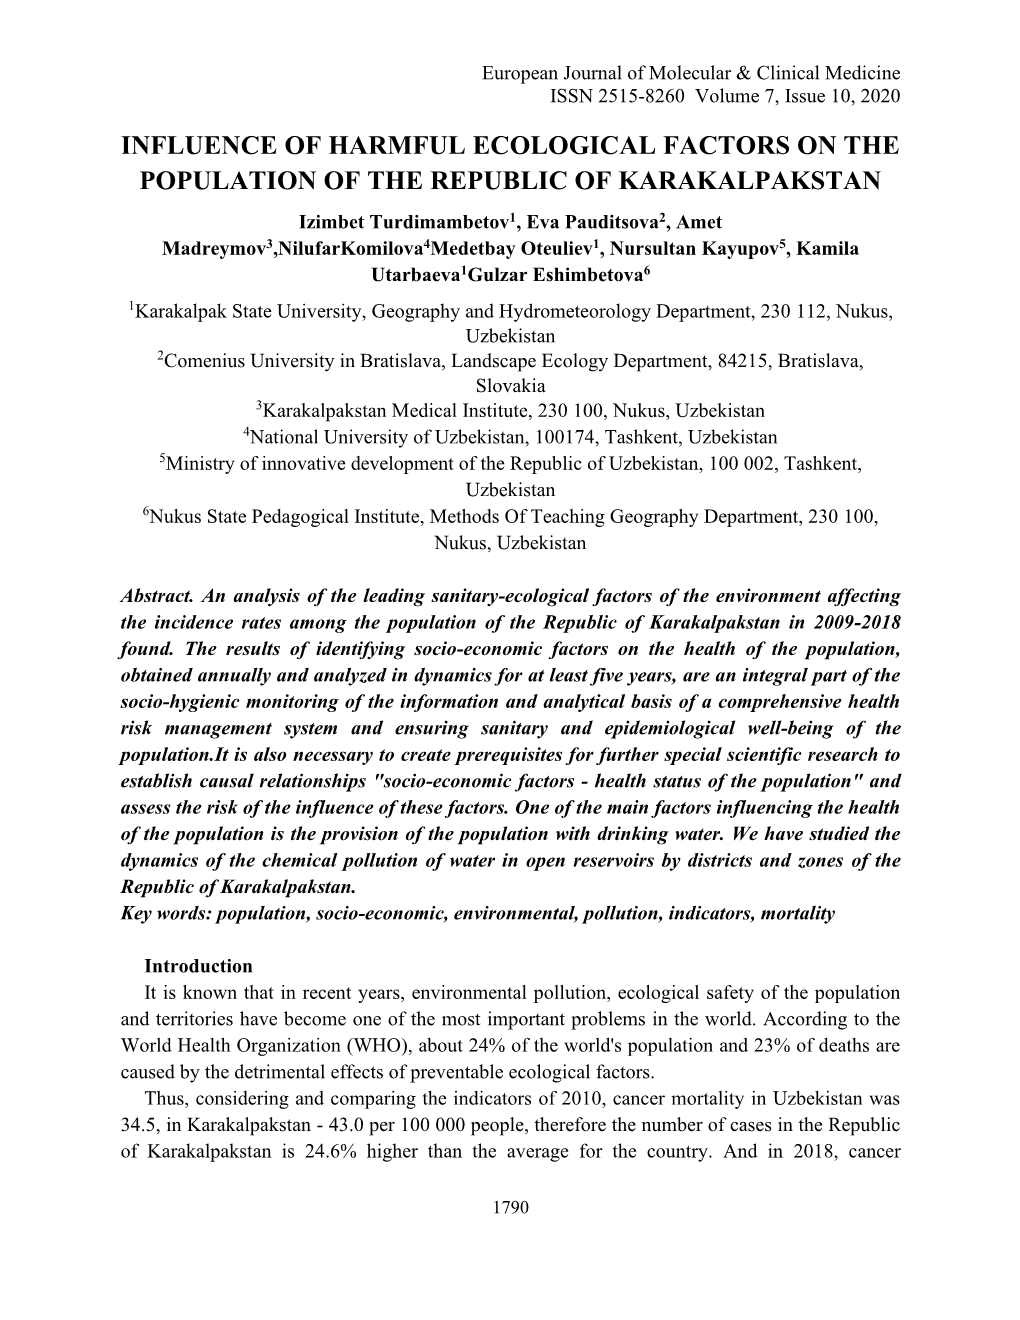 Influence of Harmful Ecological Factors on the Population of the Republic of Karakalpakstan